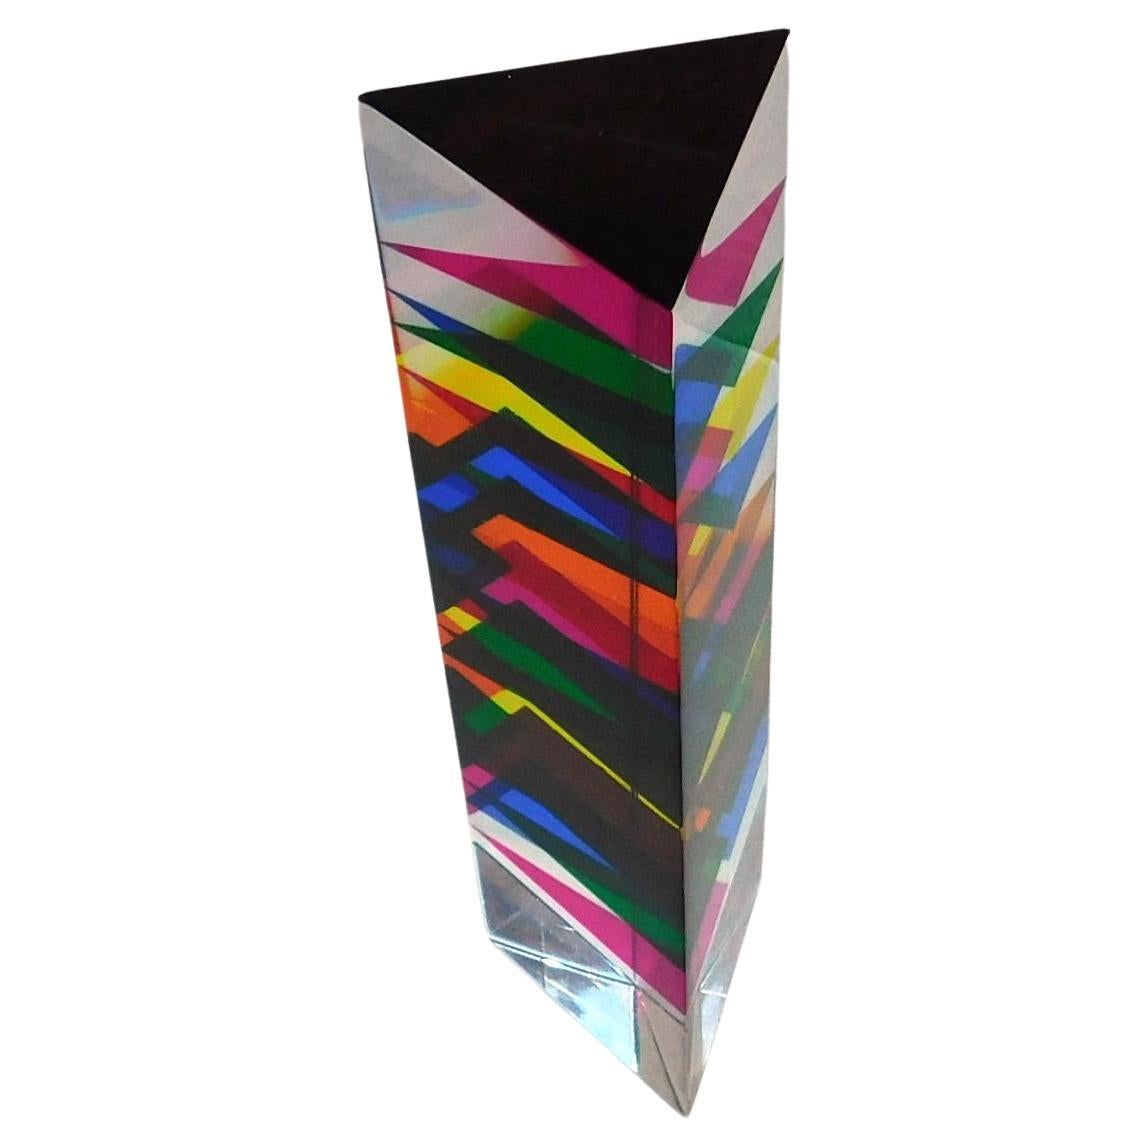 Vasa Mihich Acrylic Multi Color Triangular Table Sculpture, 2018